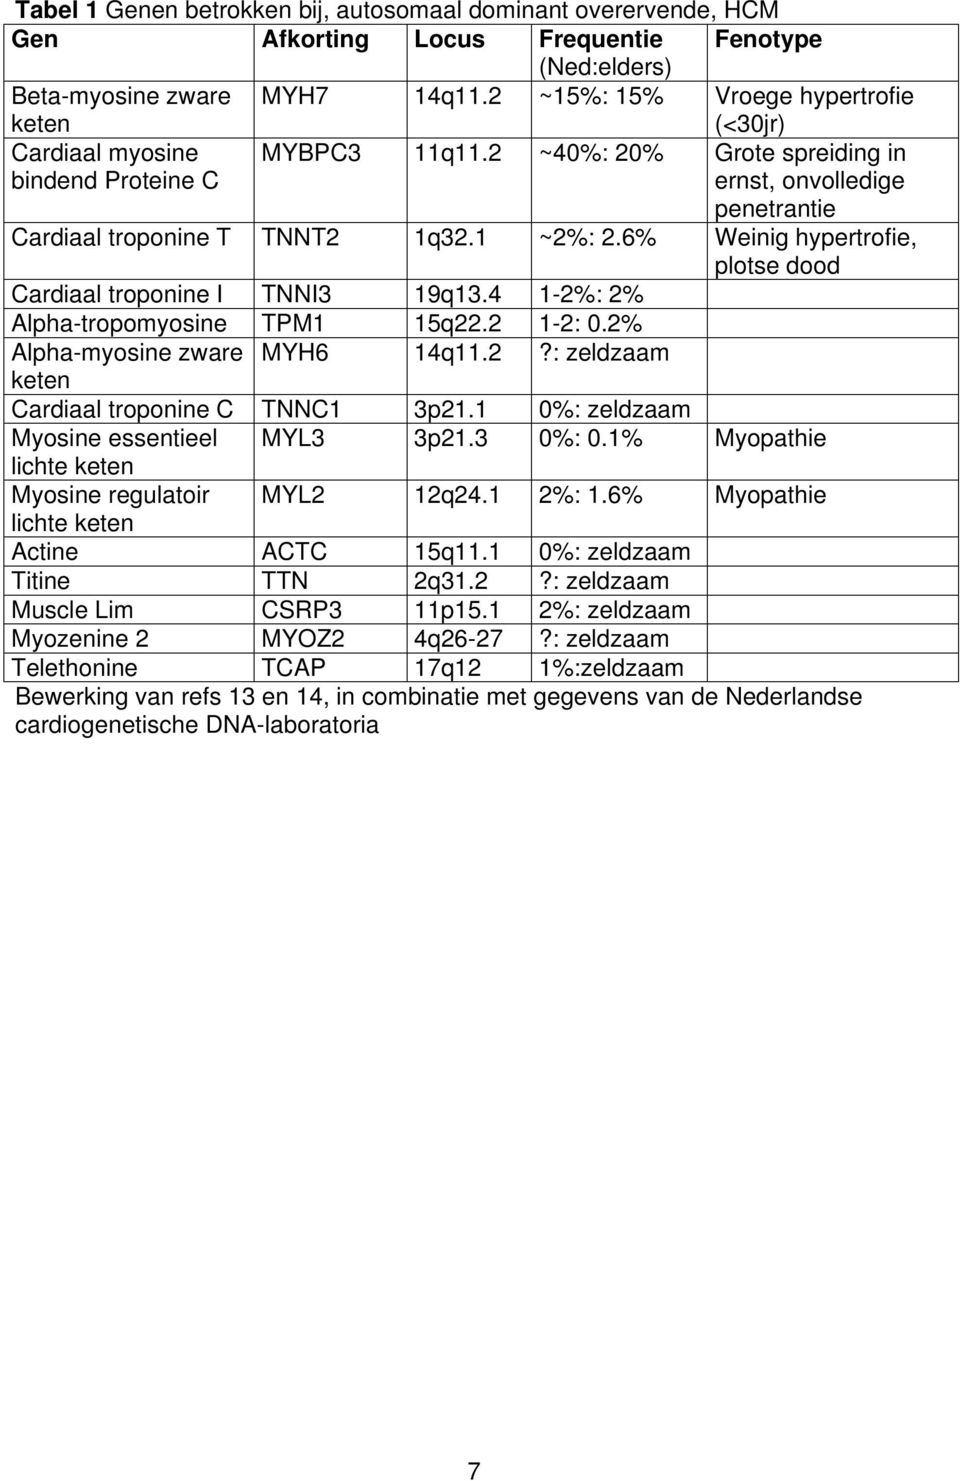 6% Weinig hypertrofie, plotse dood Cardiaal troponine I TNNI3 19q13.4 1-2%: 2% Alpha-tropomyosine TPM1 15q22.2 1-2: 0.2% Alpha-myosine zware MYH6 14q11.2?: zeldzaam keten Cardiaal troponine C TNNC1 3p21.